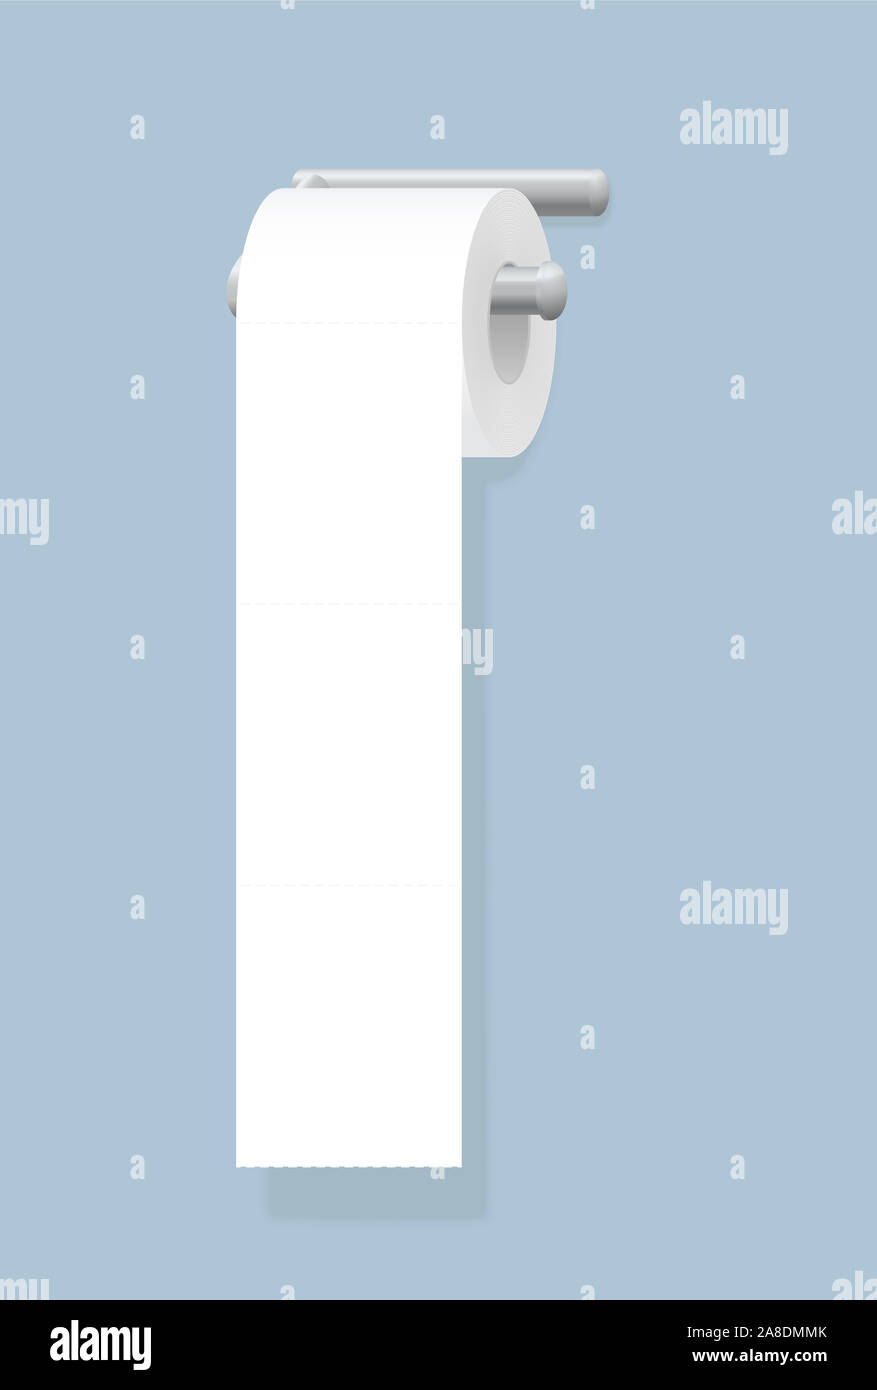 White toilet paper roll hanging on chrome holder - illustration on blue background. Stock Photo